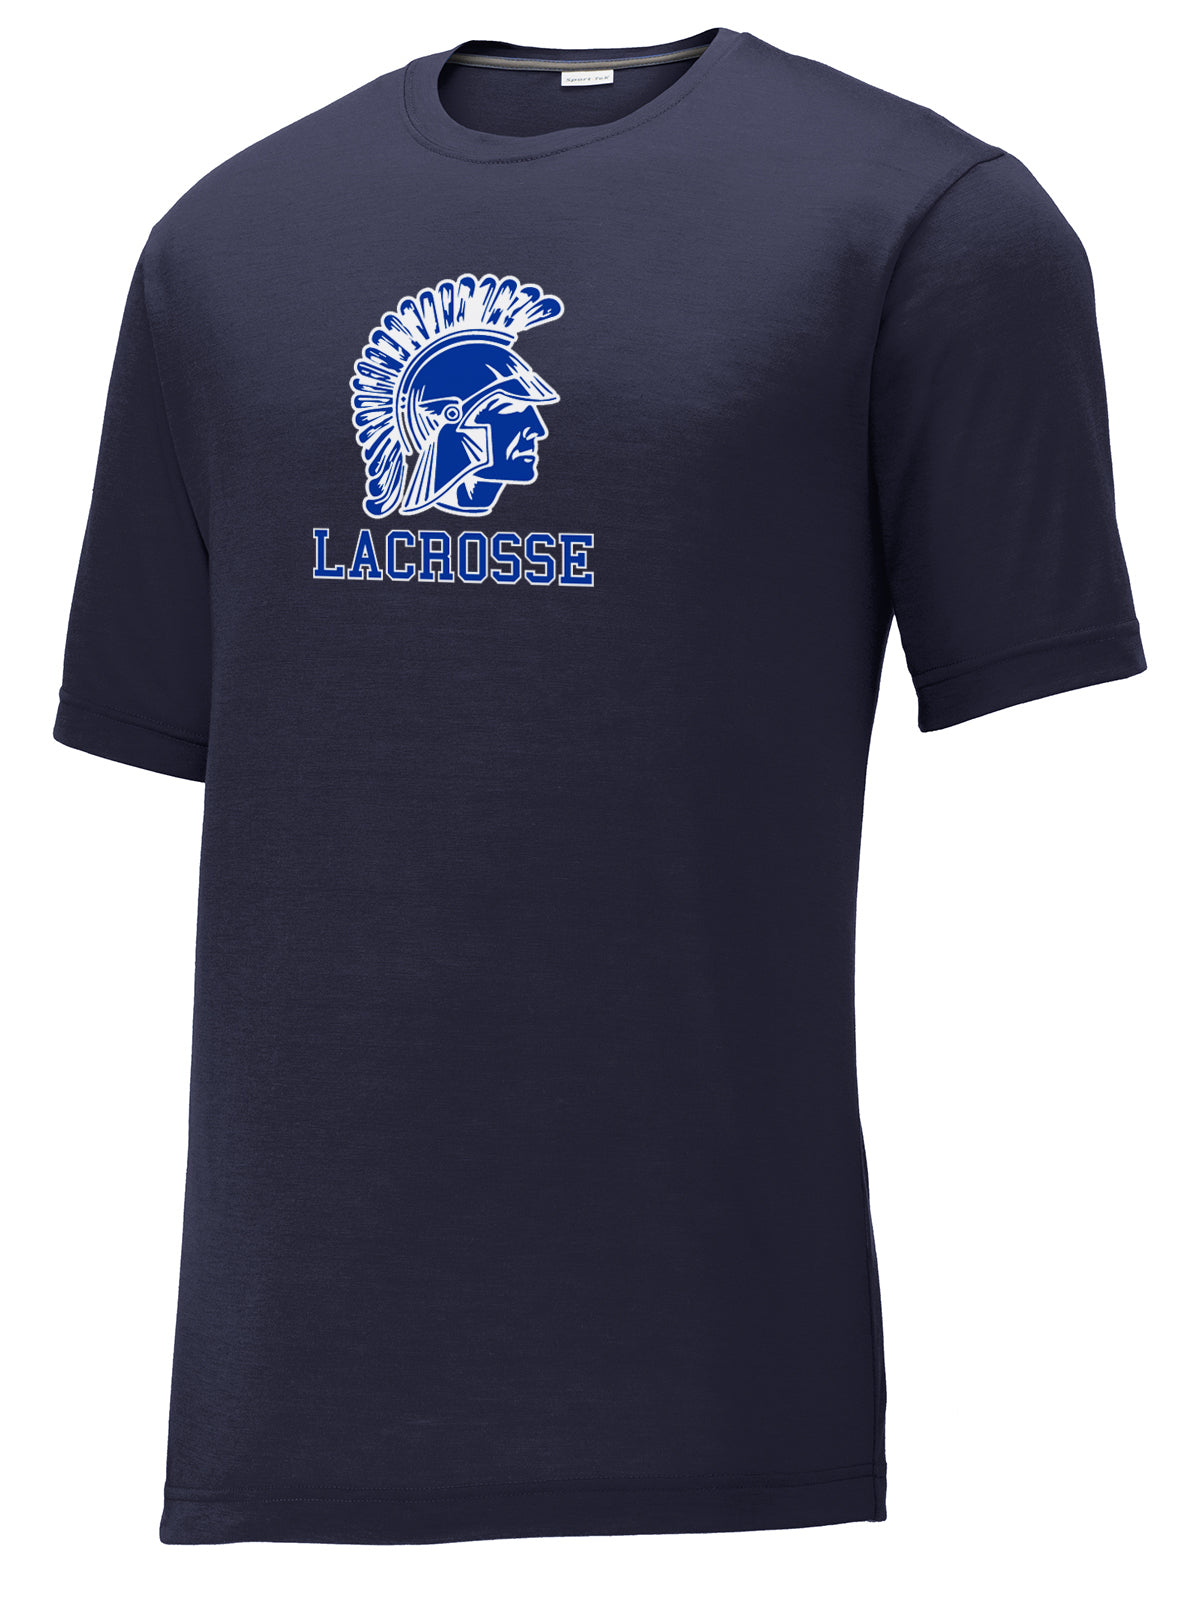 Chambersburg Lacrosse Men's Navy CottonTouch Performance T-Shirt